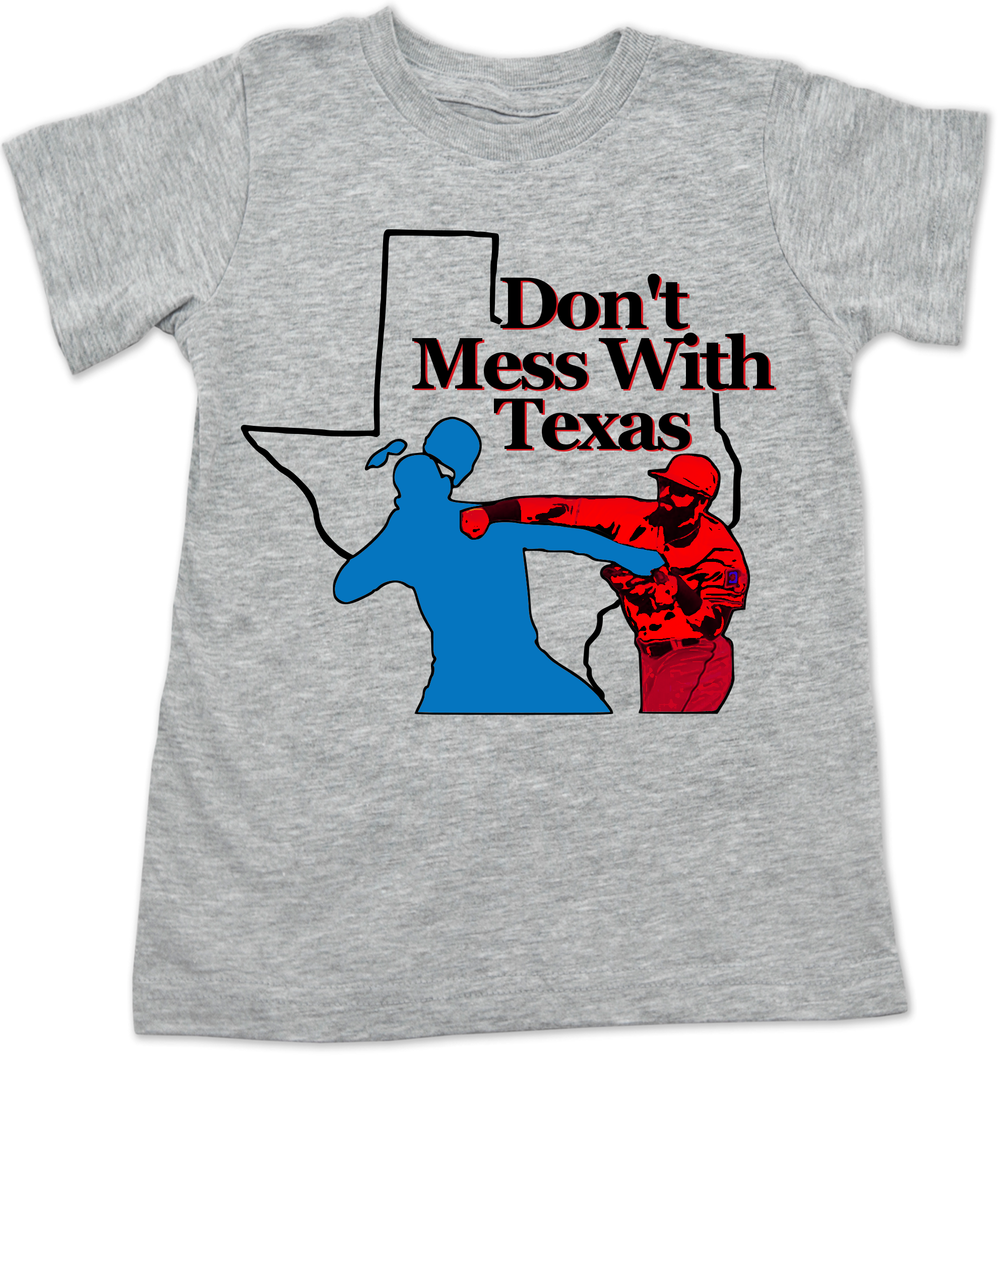 texas rangers odor shirt